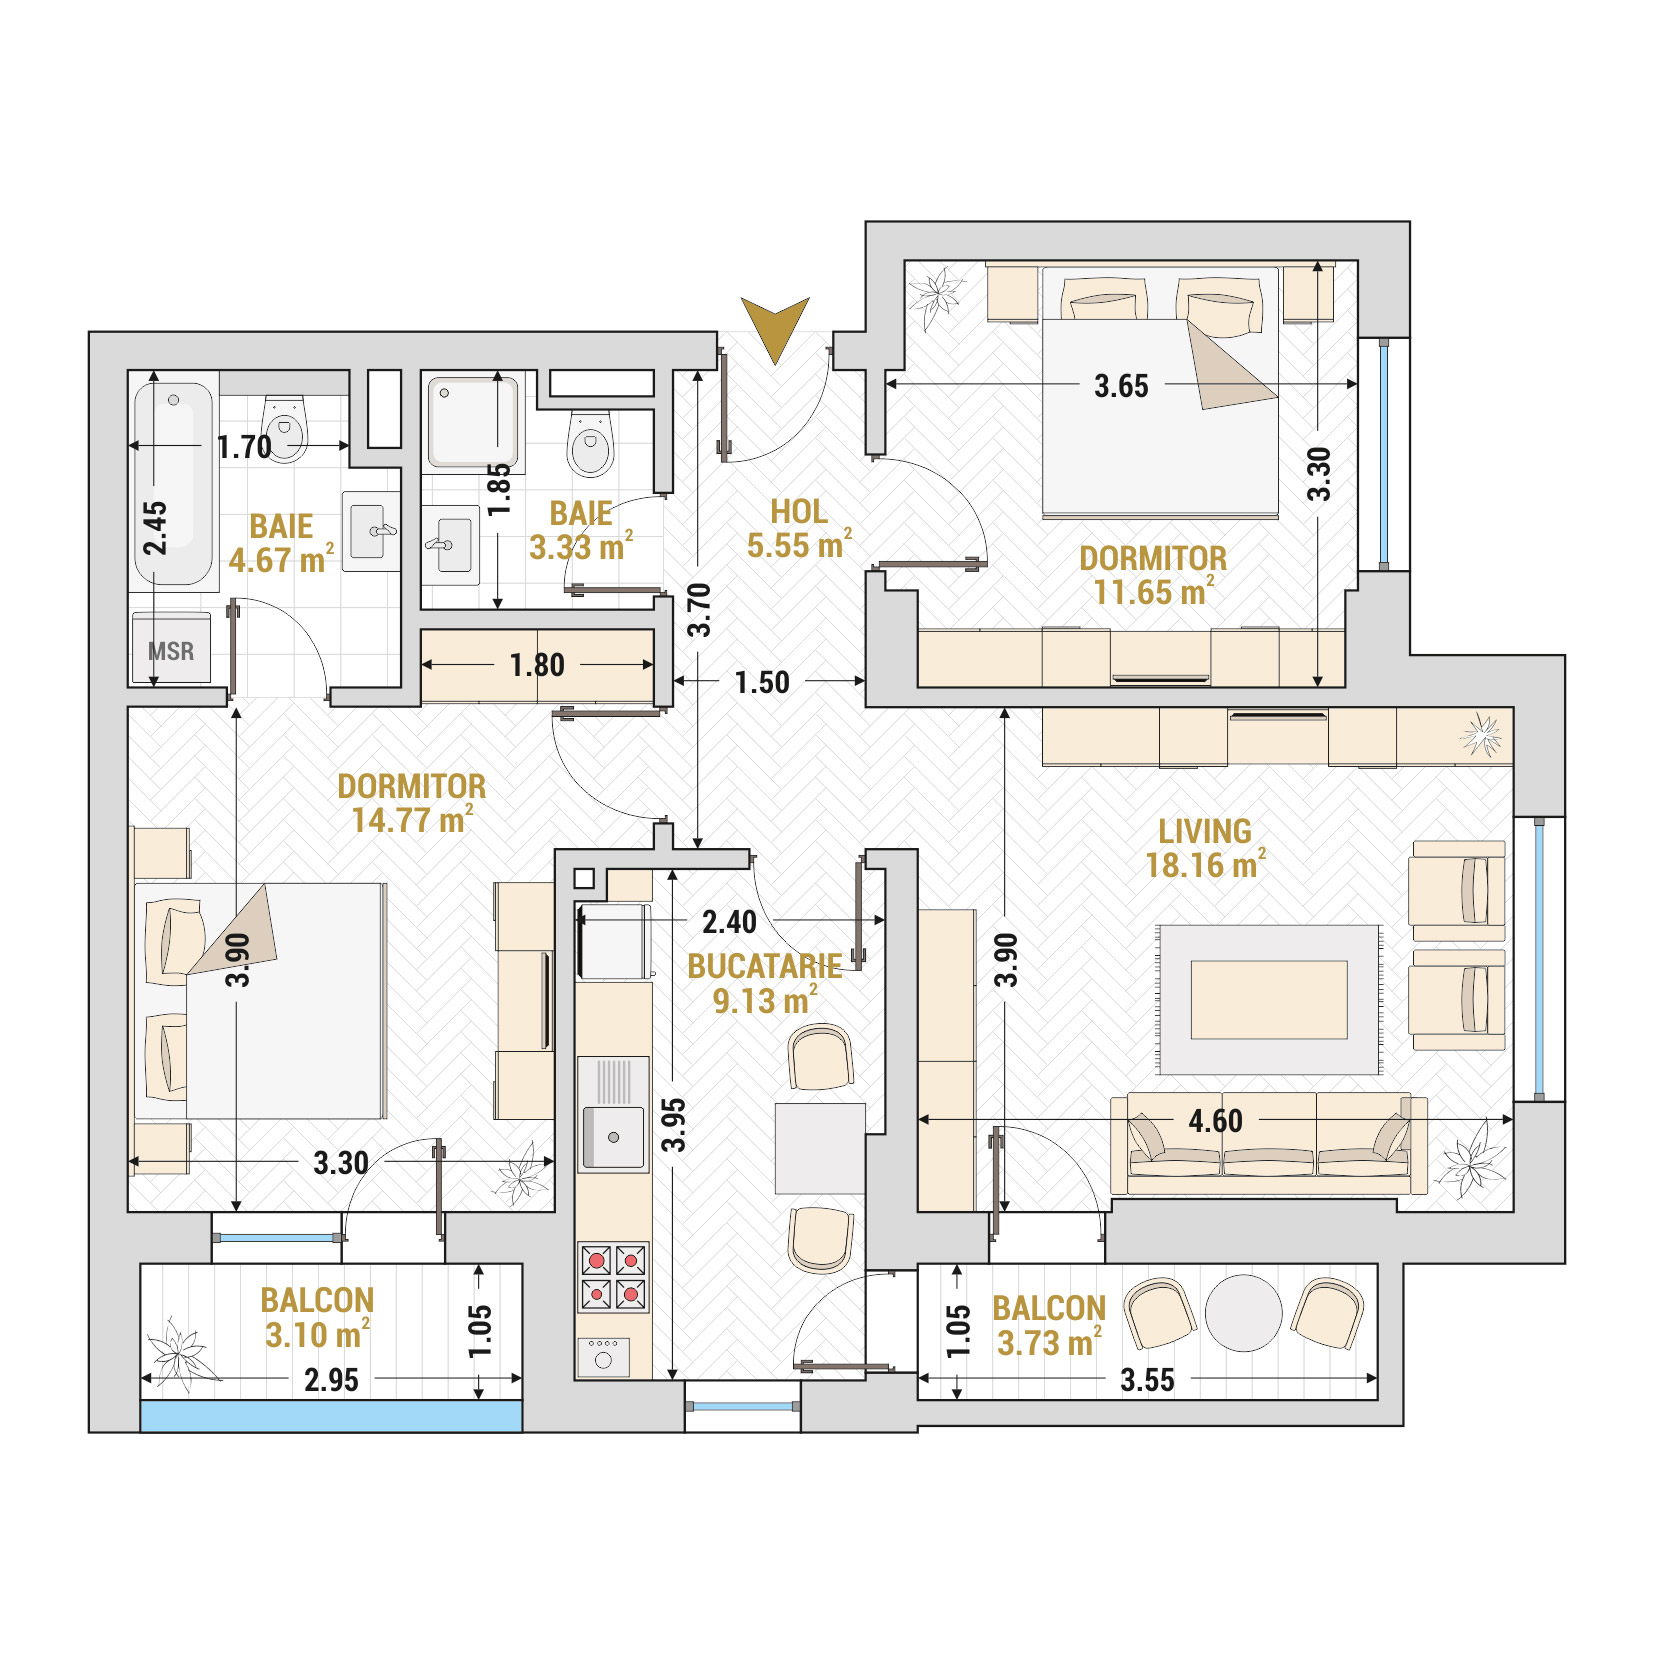 Apartament 3 Camere Tip 1 Corp 7 - Drumul Taberei Residence - Apartamente de vanzare Bucuresti - Suprafata utila totala - 74.09 mp